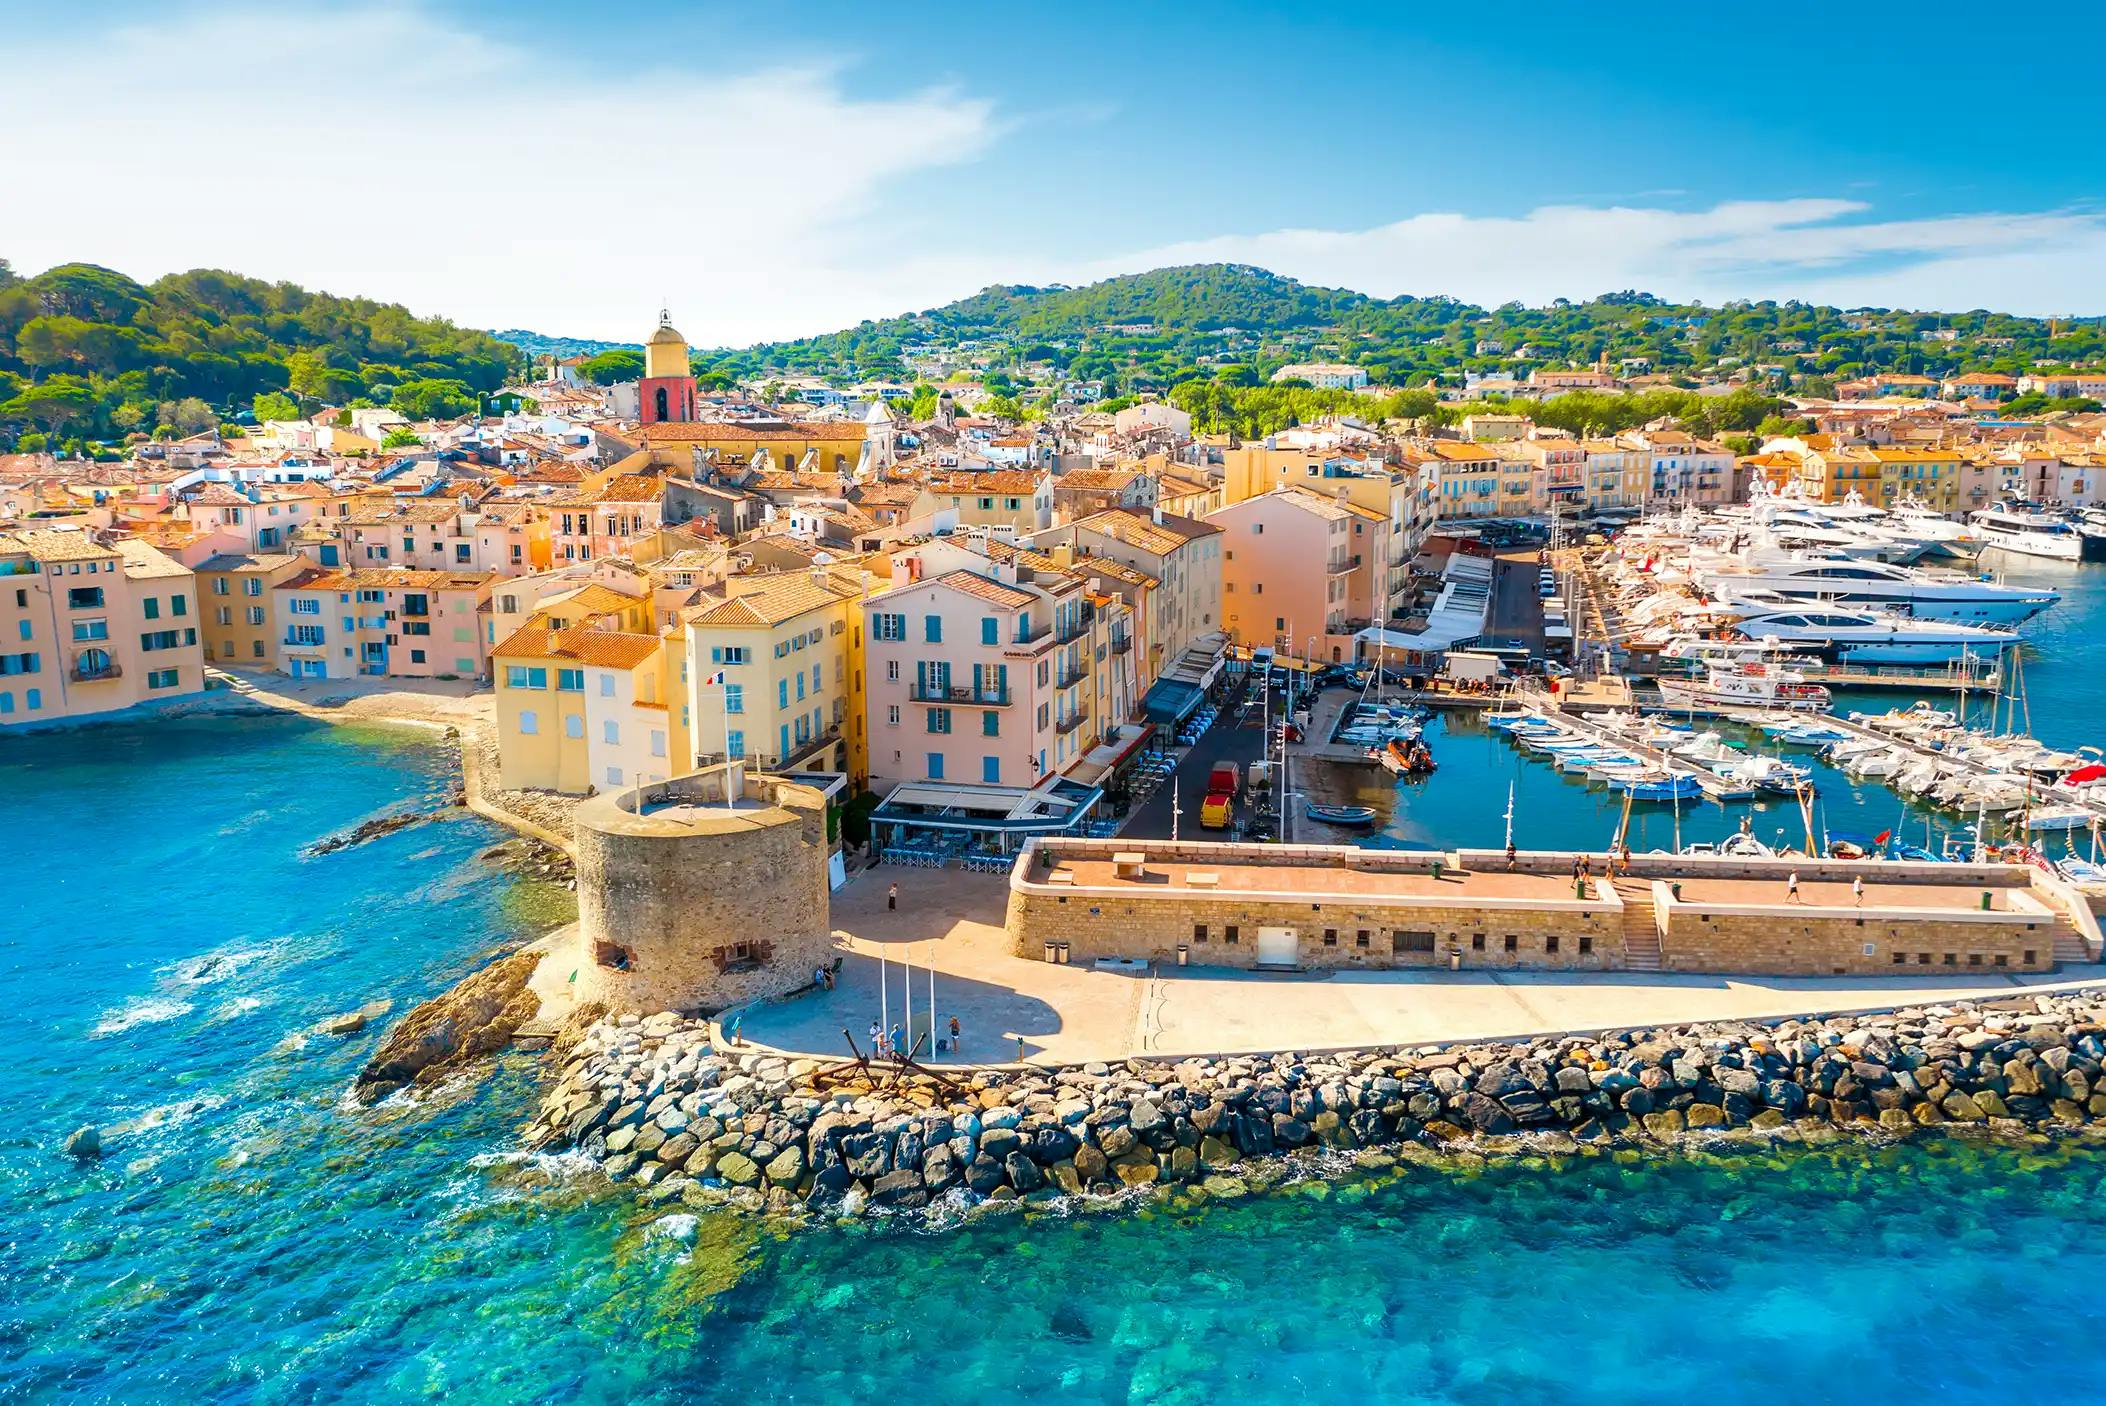 Port view of St. Tropez, France